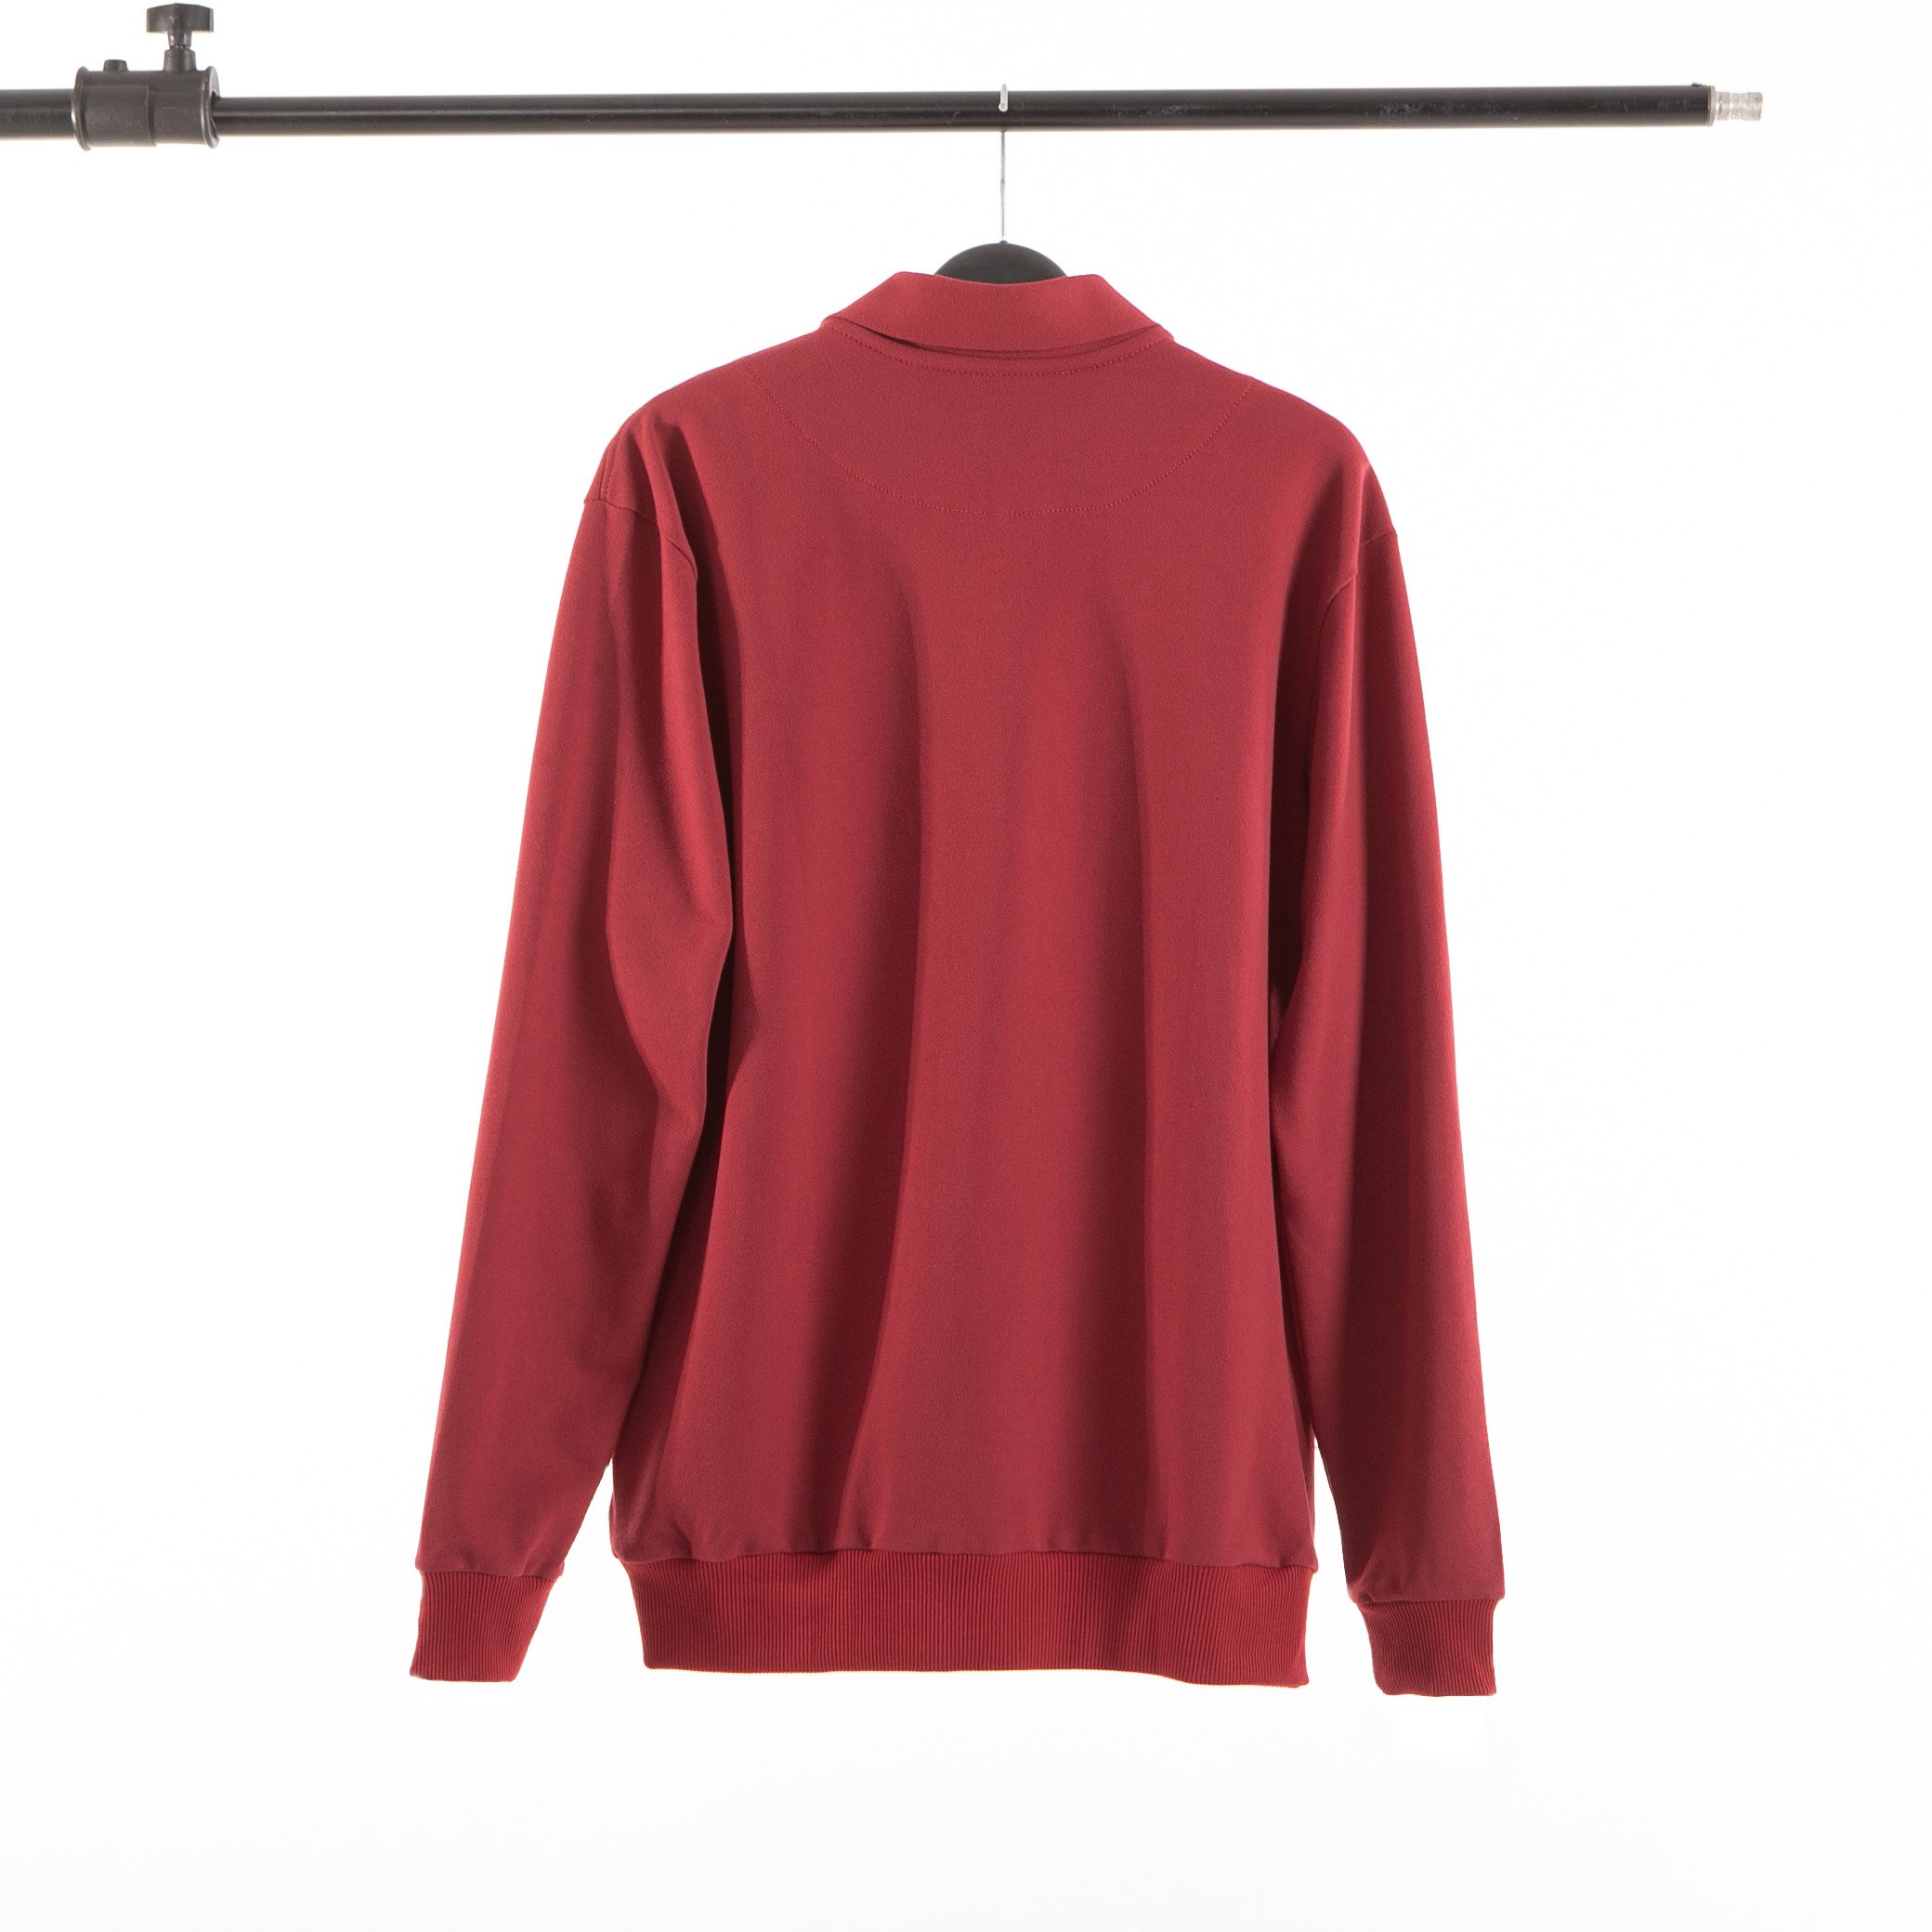 Áo sweater có cổ nam Old Sailor - O.S.L XMAS SWEATER - RED - SWDO88517 - đỏ - Big size upto 5XL